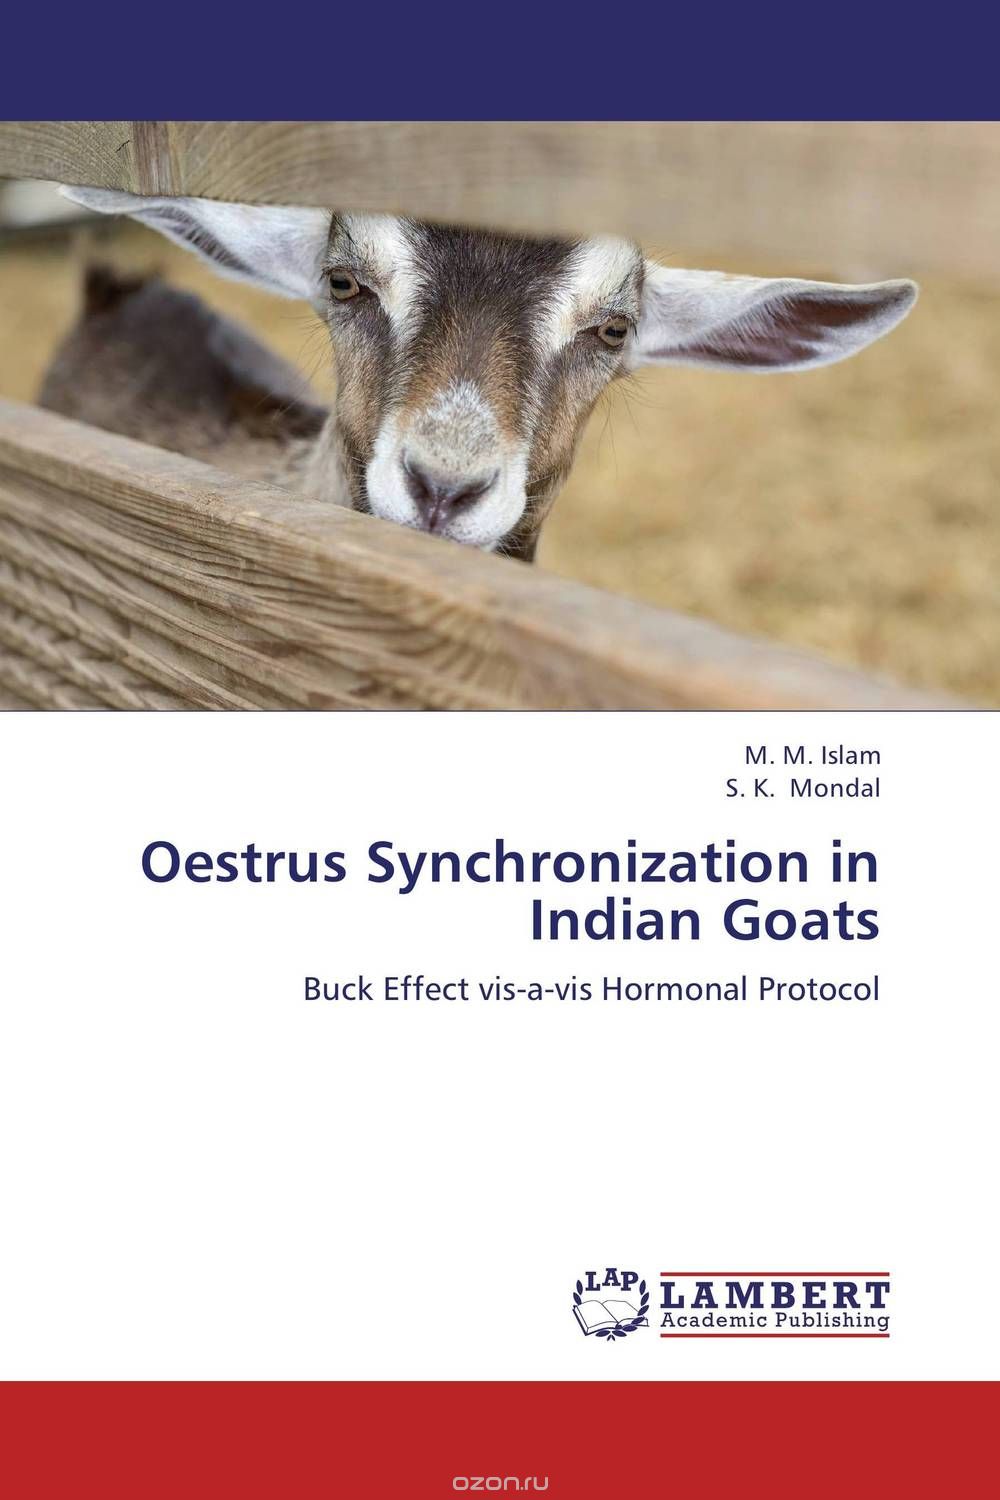 Скачать книгу "Oestrus Synchronization in Indian Goats"